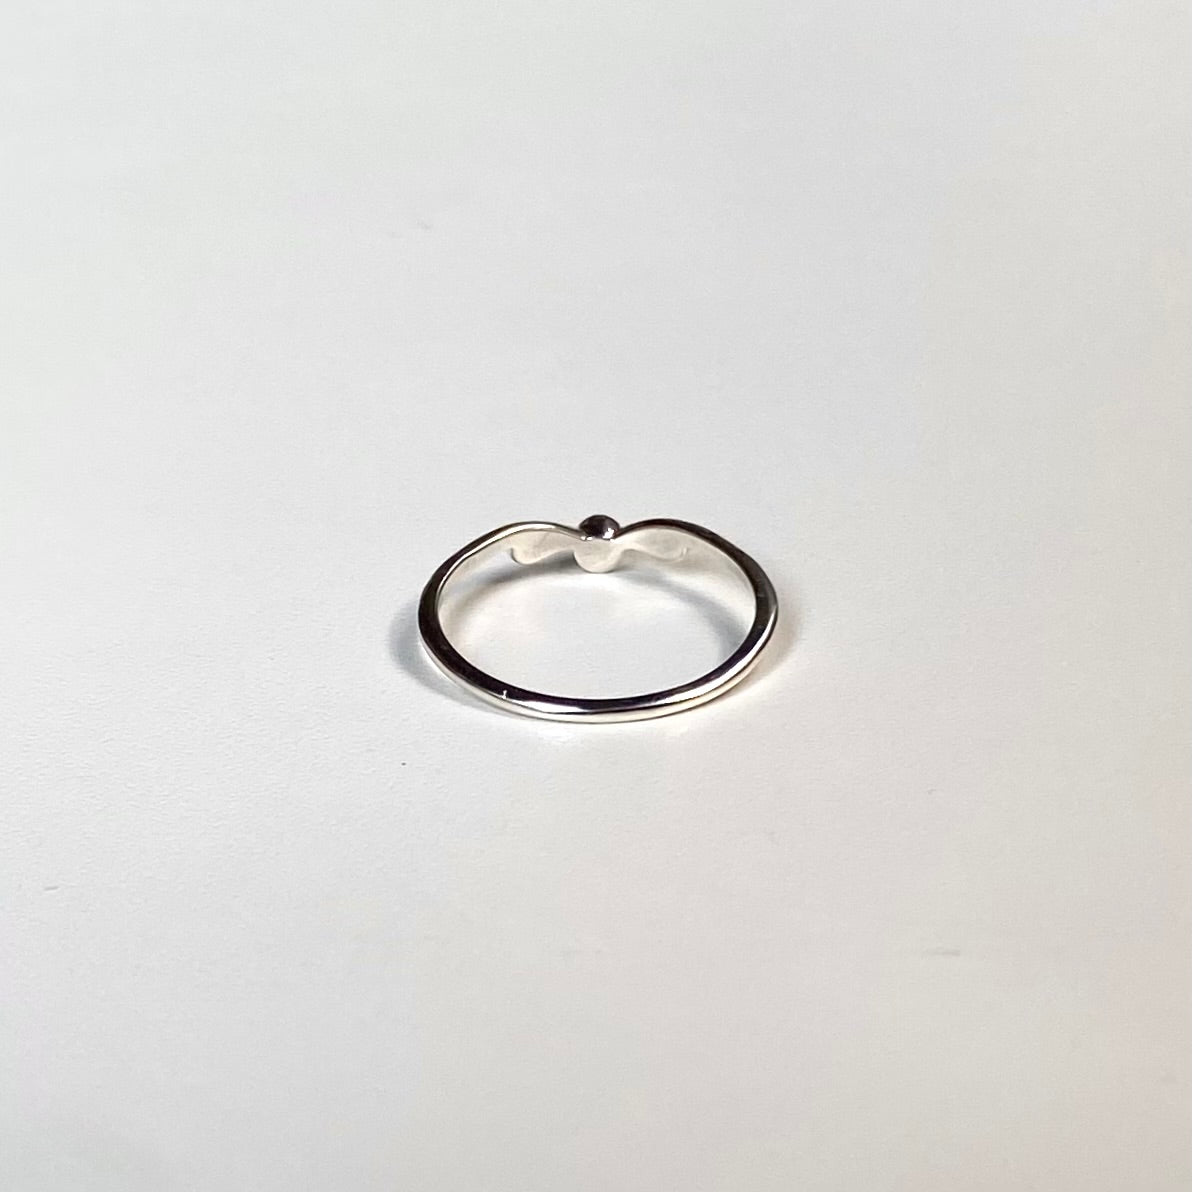 Silver925 plain ring 1